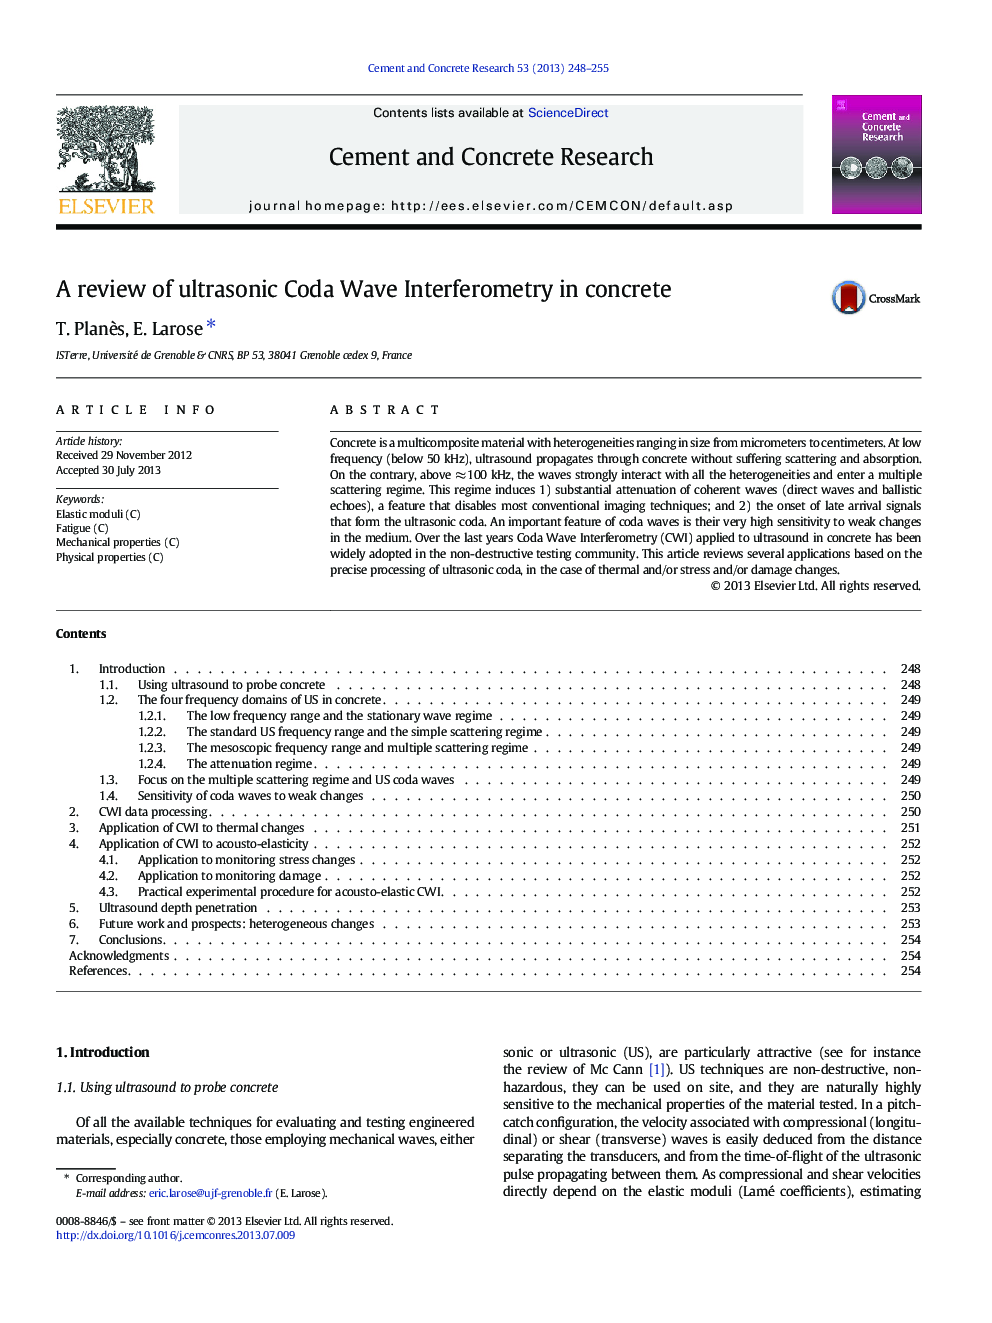 A review of ultrasonic Coda Wave Interferometry in concrete